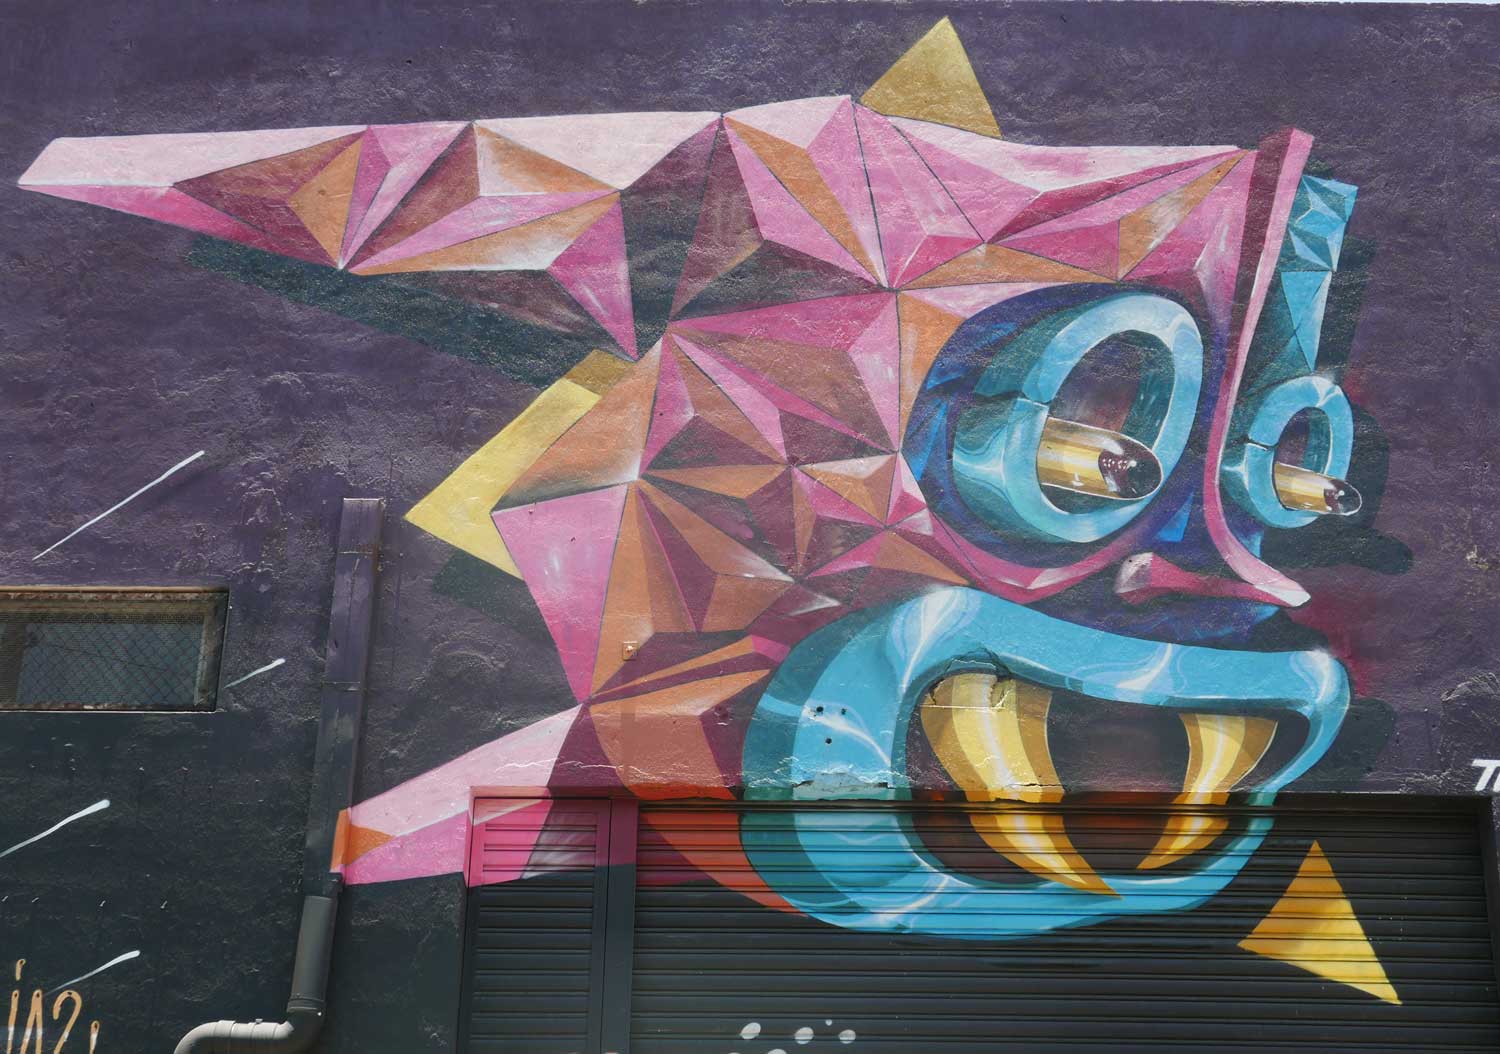 Art fish. Near the university. Street art in San Jose, Costa Rica